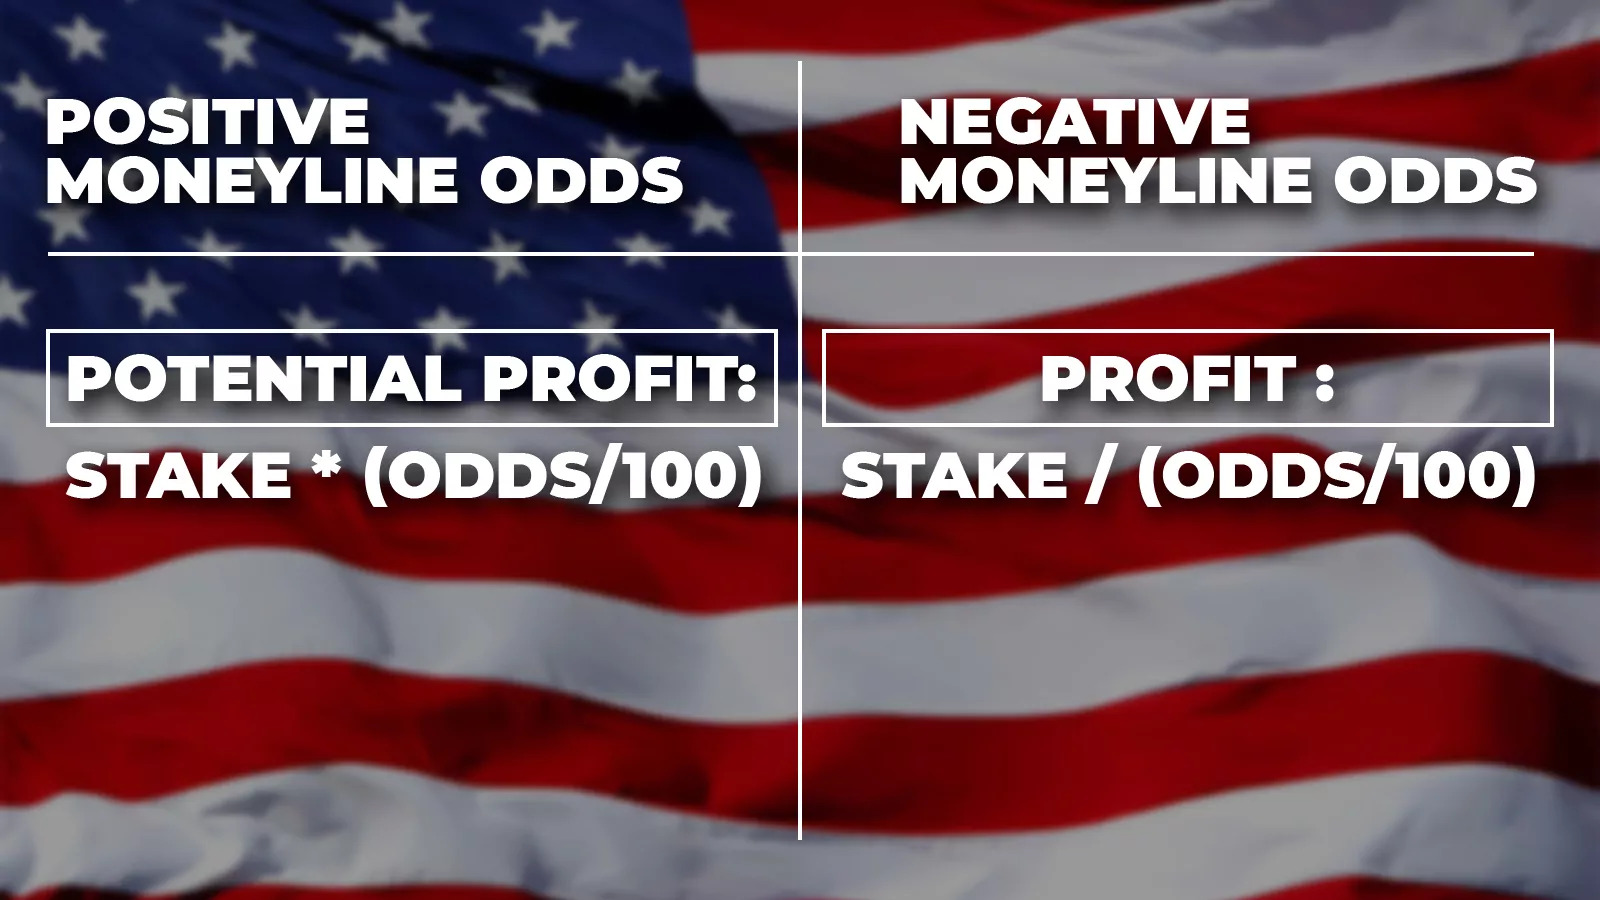 American odds